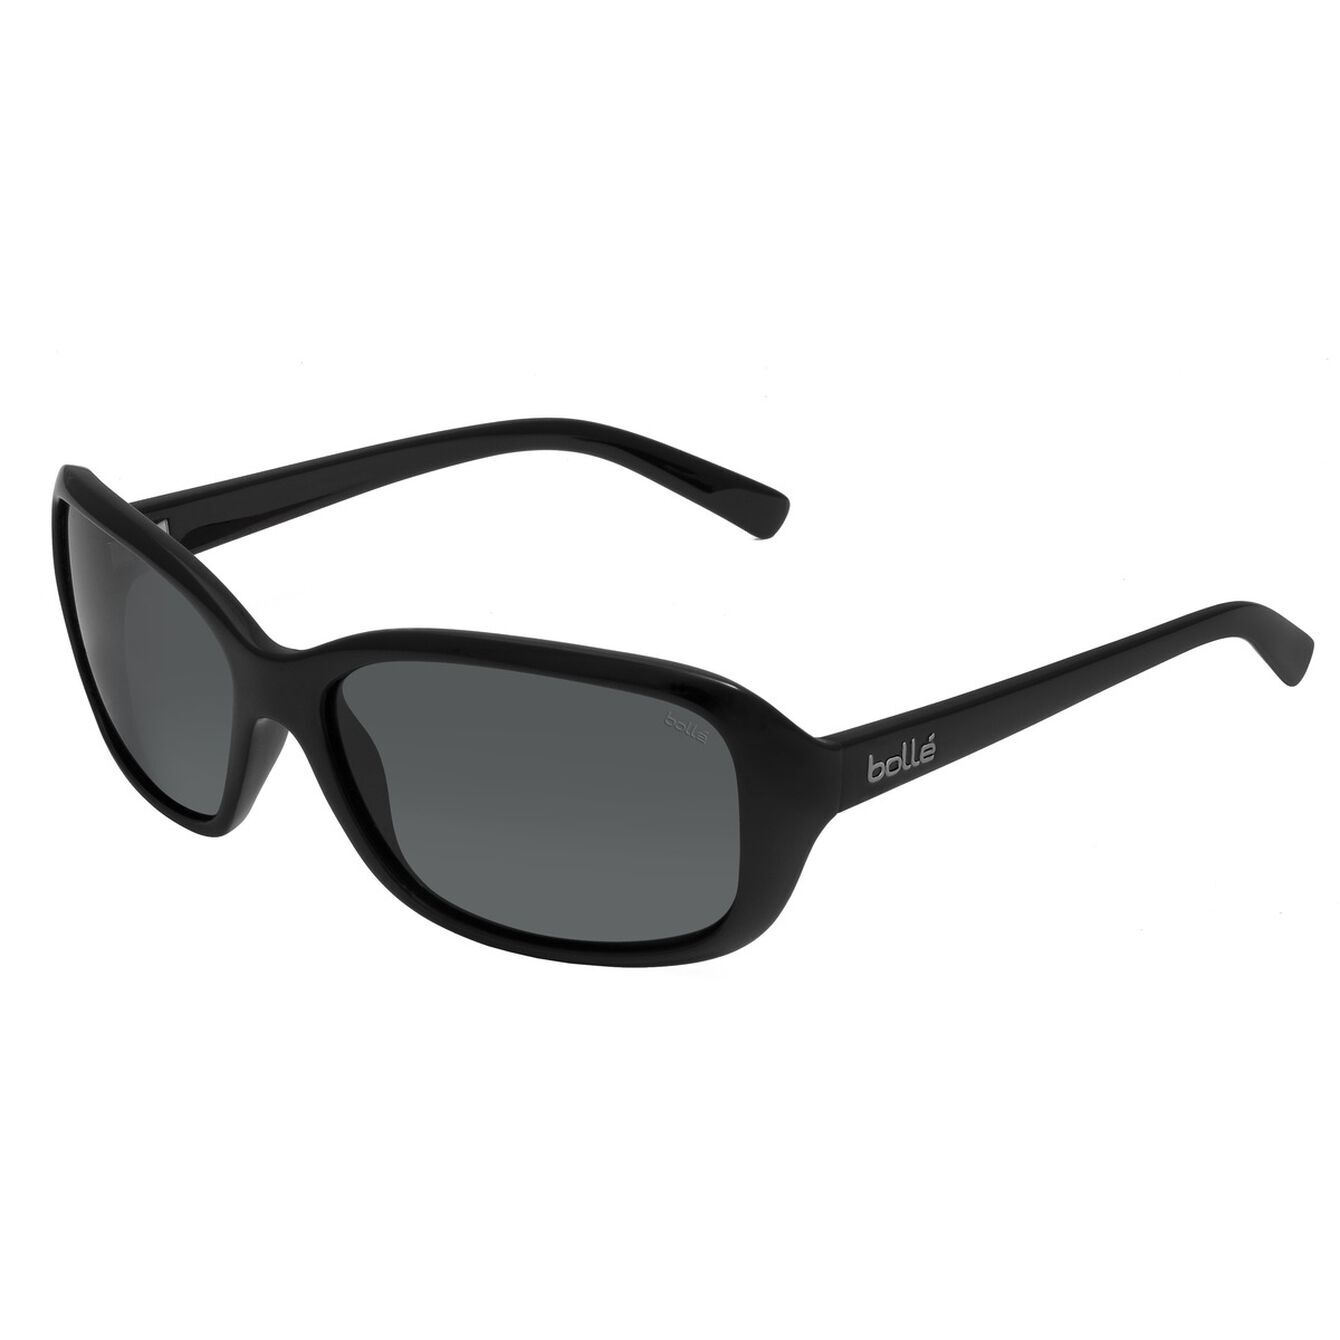 Bolle Anaconda Sunglasses | RxSport